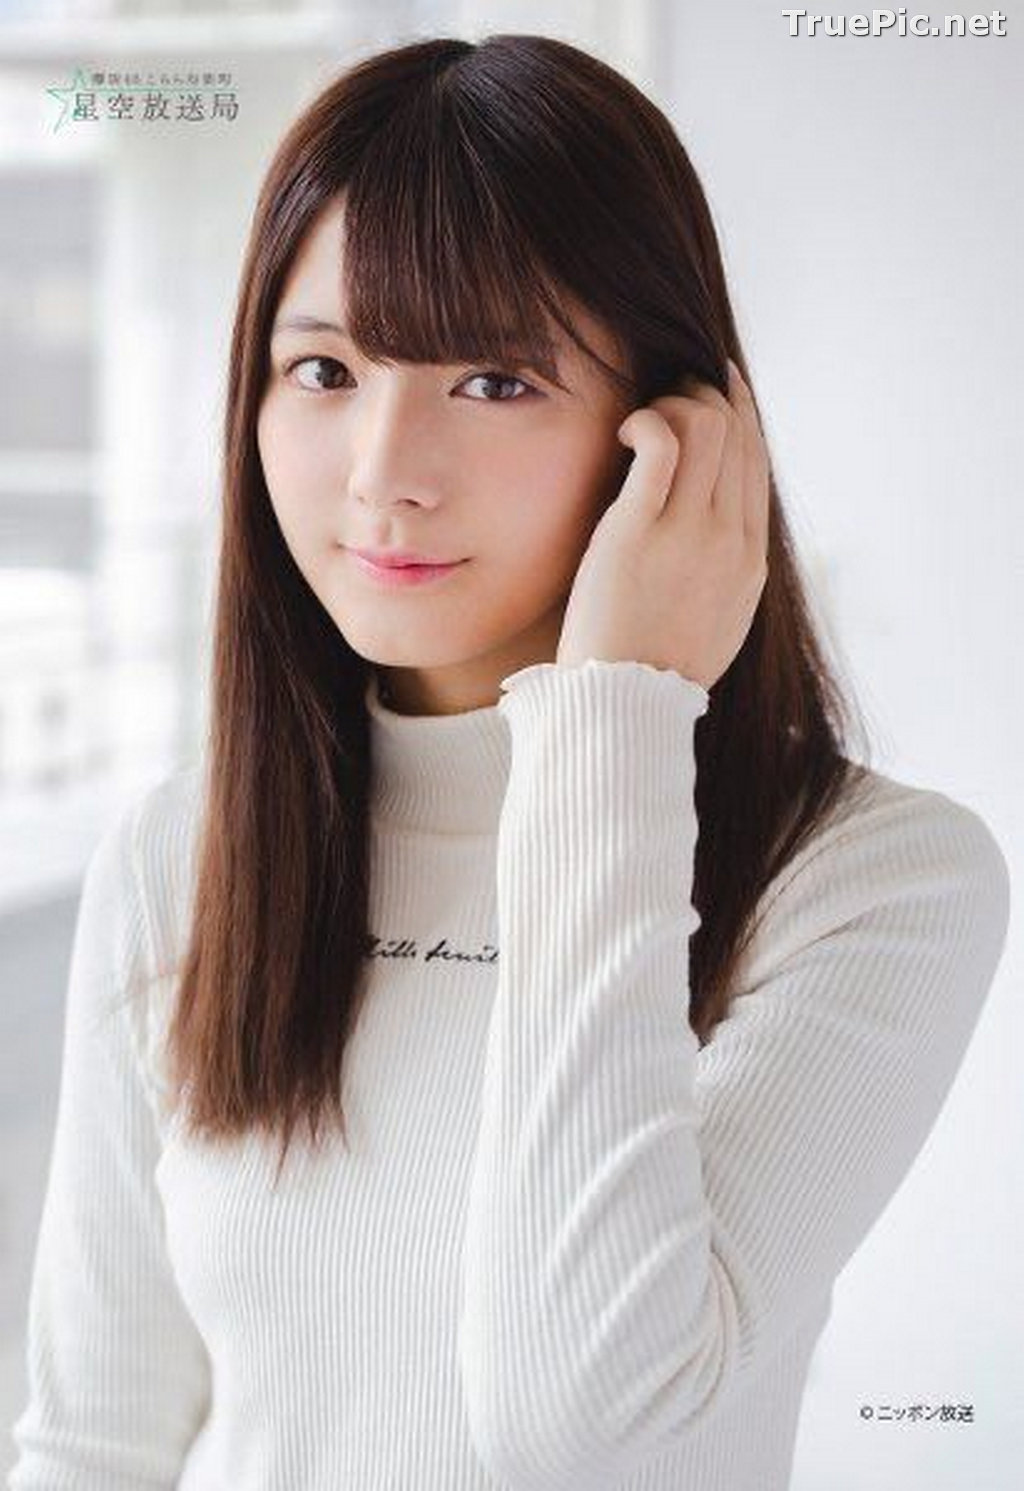 Image Japanese Idol Singer - Yumiko Seki (関有美子) - Beautiful Picture Collection 2020 - TruePic.net - Picture-31